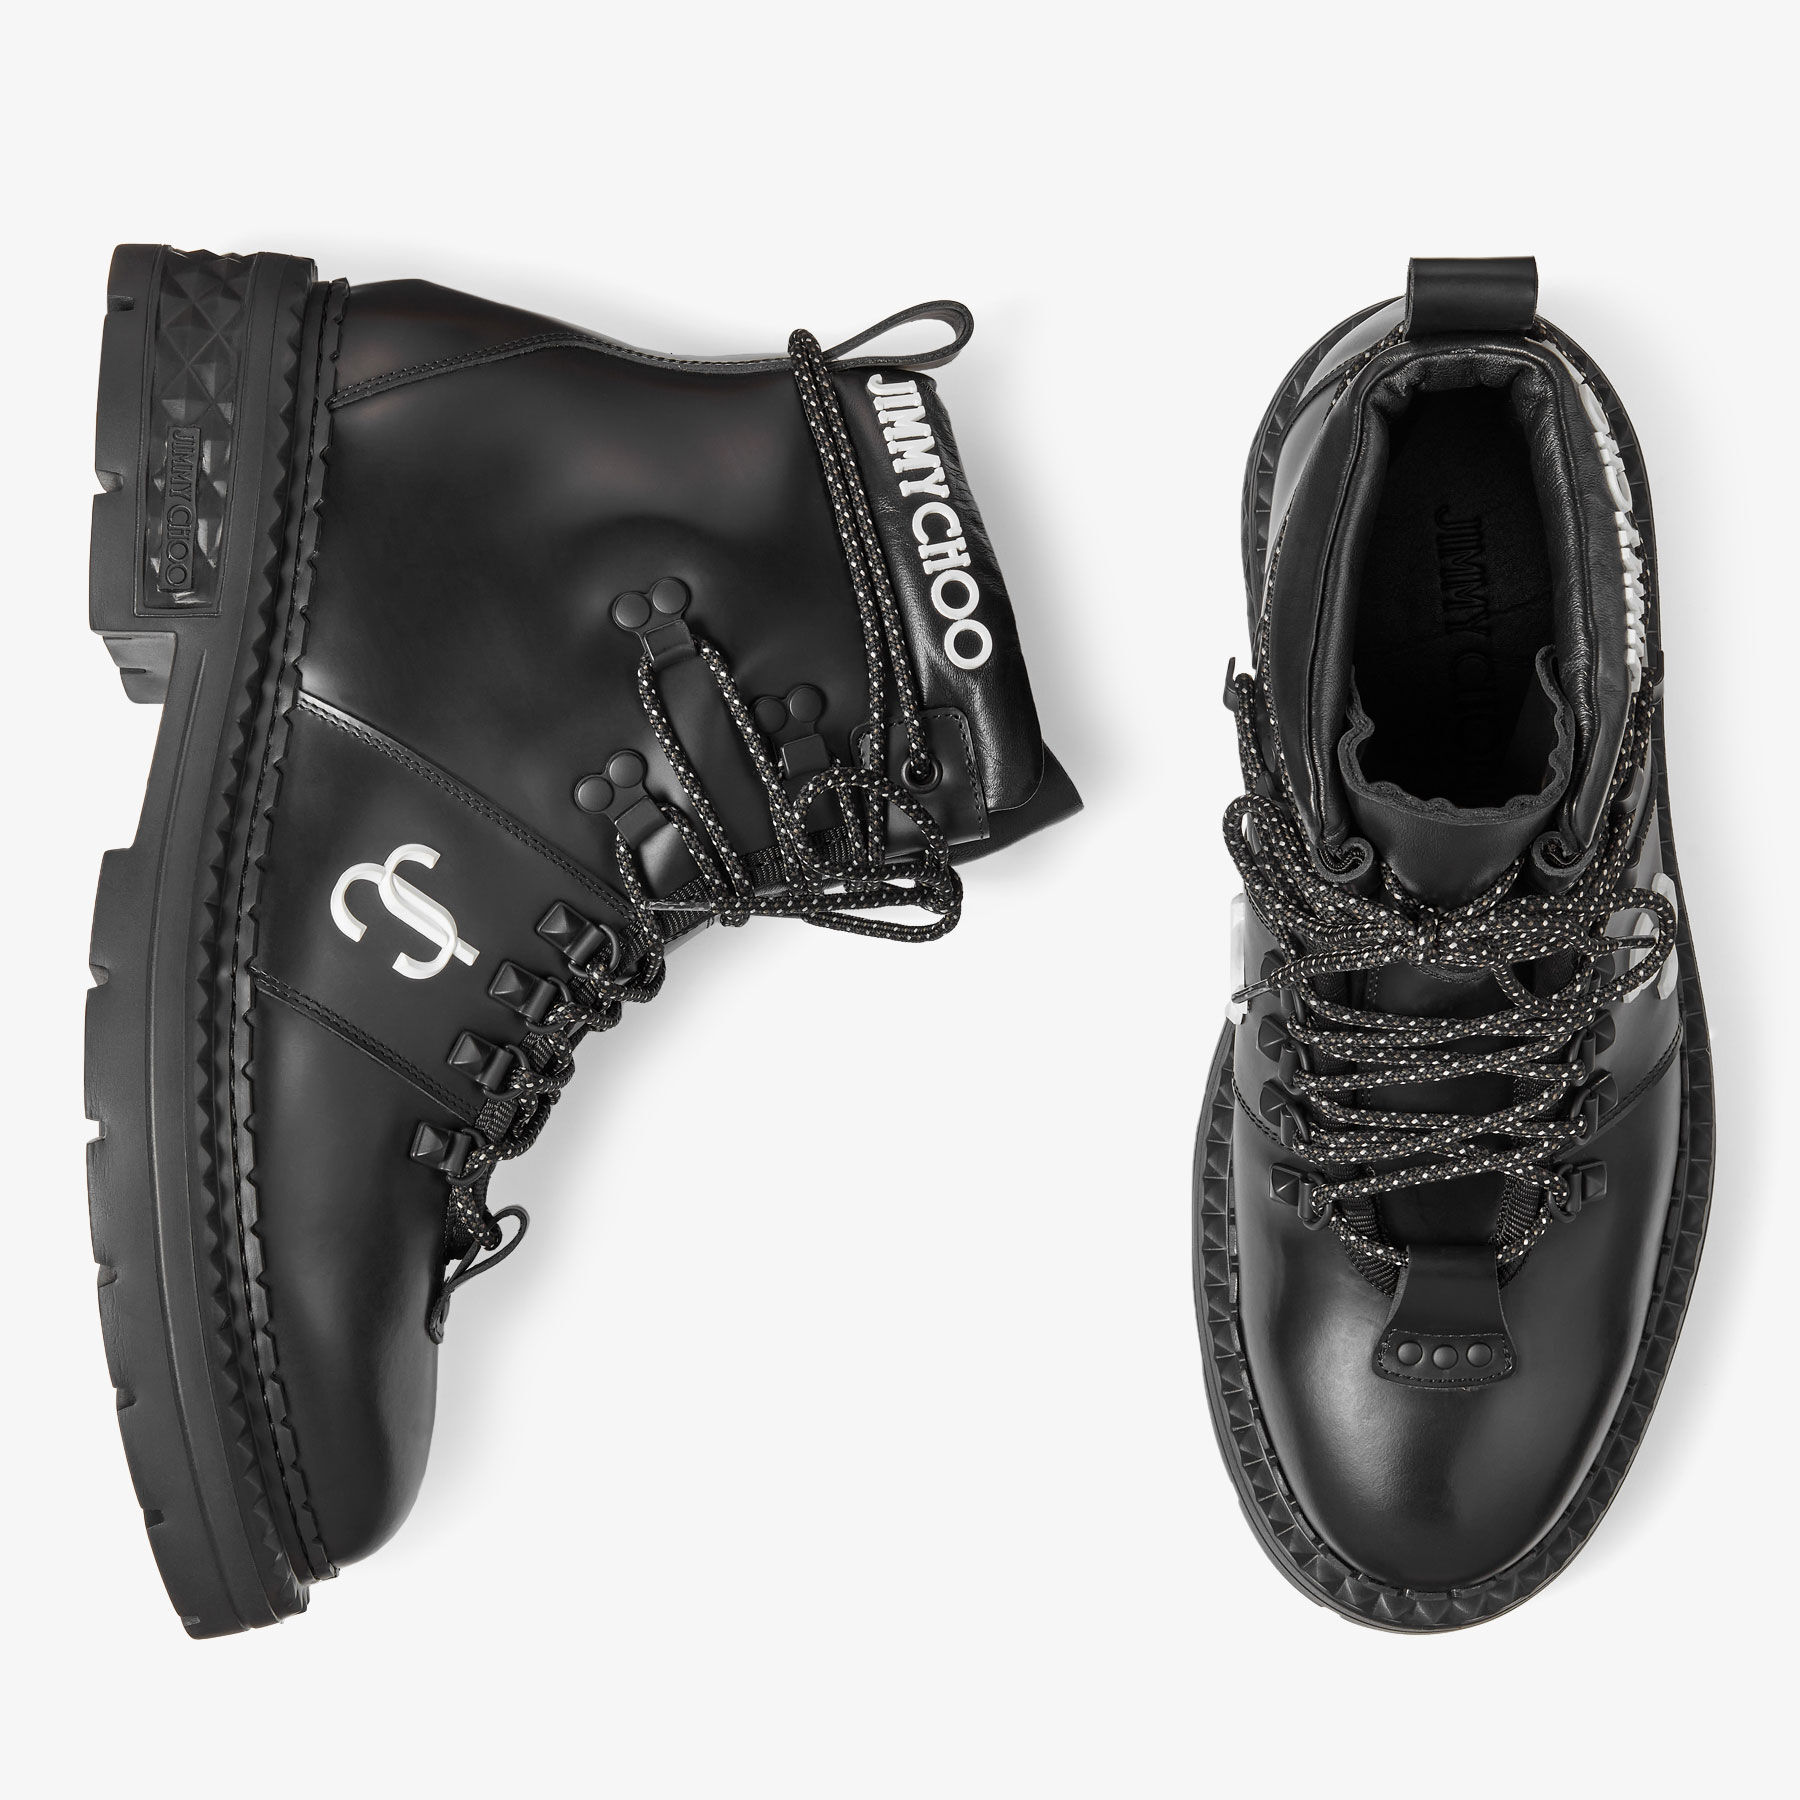 Jimmy Choo Marlow Hiking Boot Black Leather and JC Monogram Denim Hiking Boots - Denim/Black - 41.5